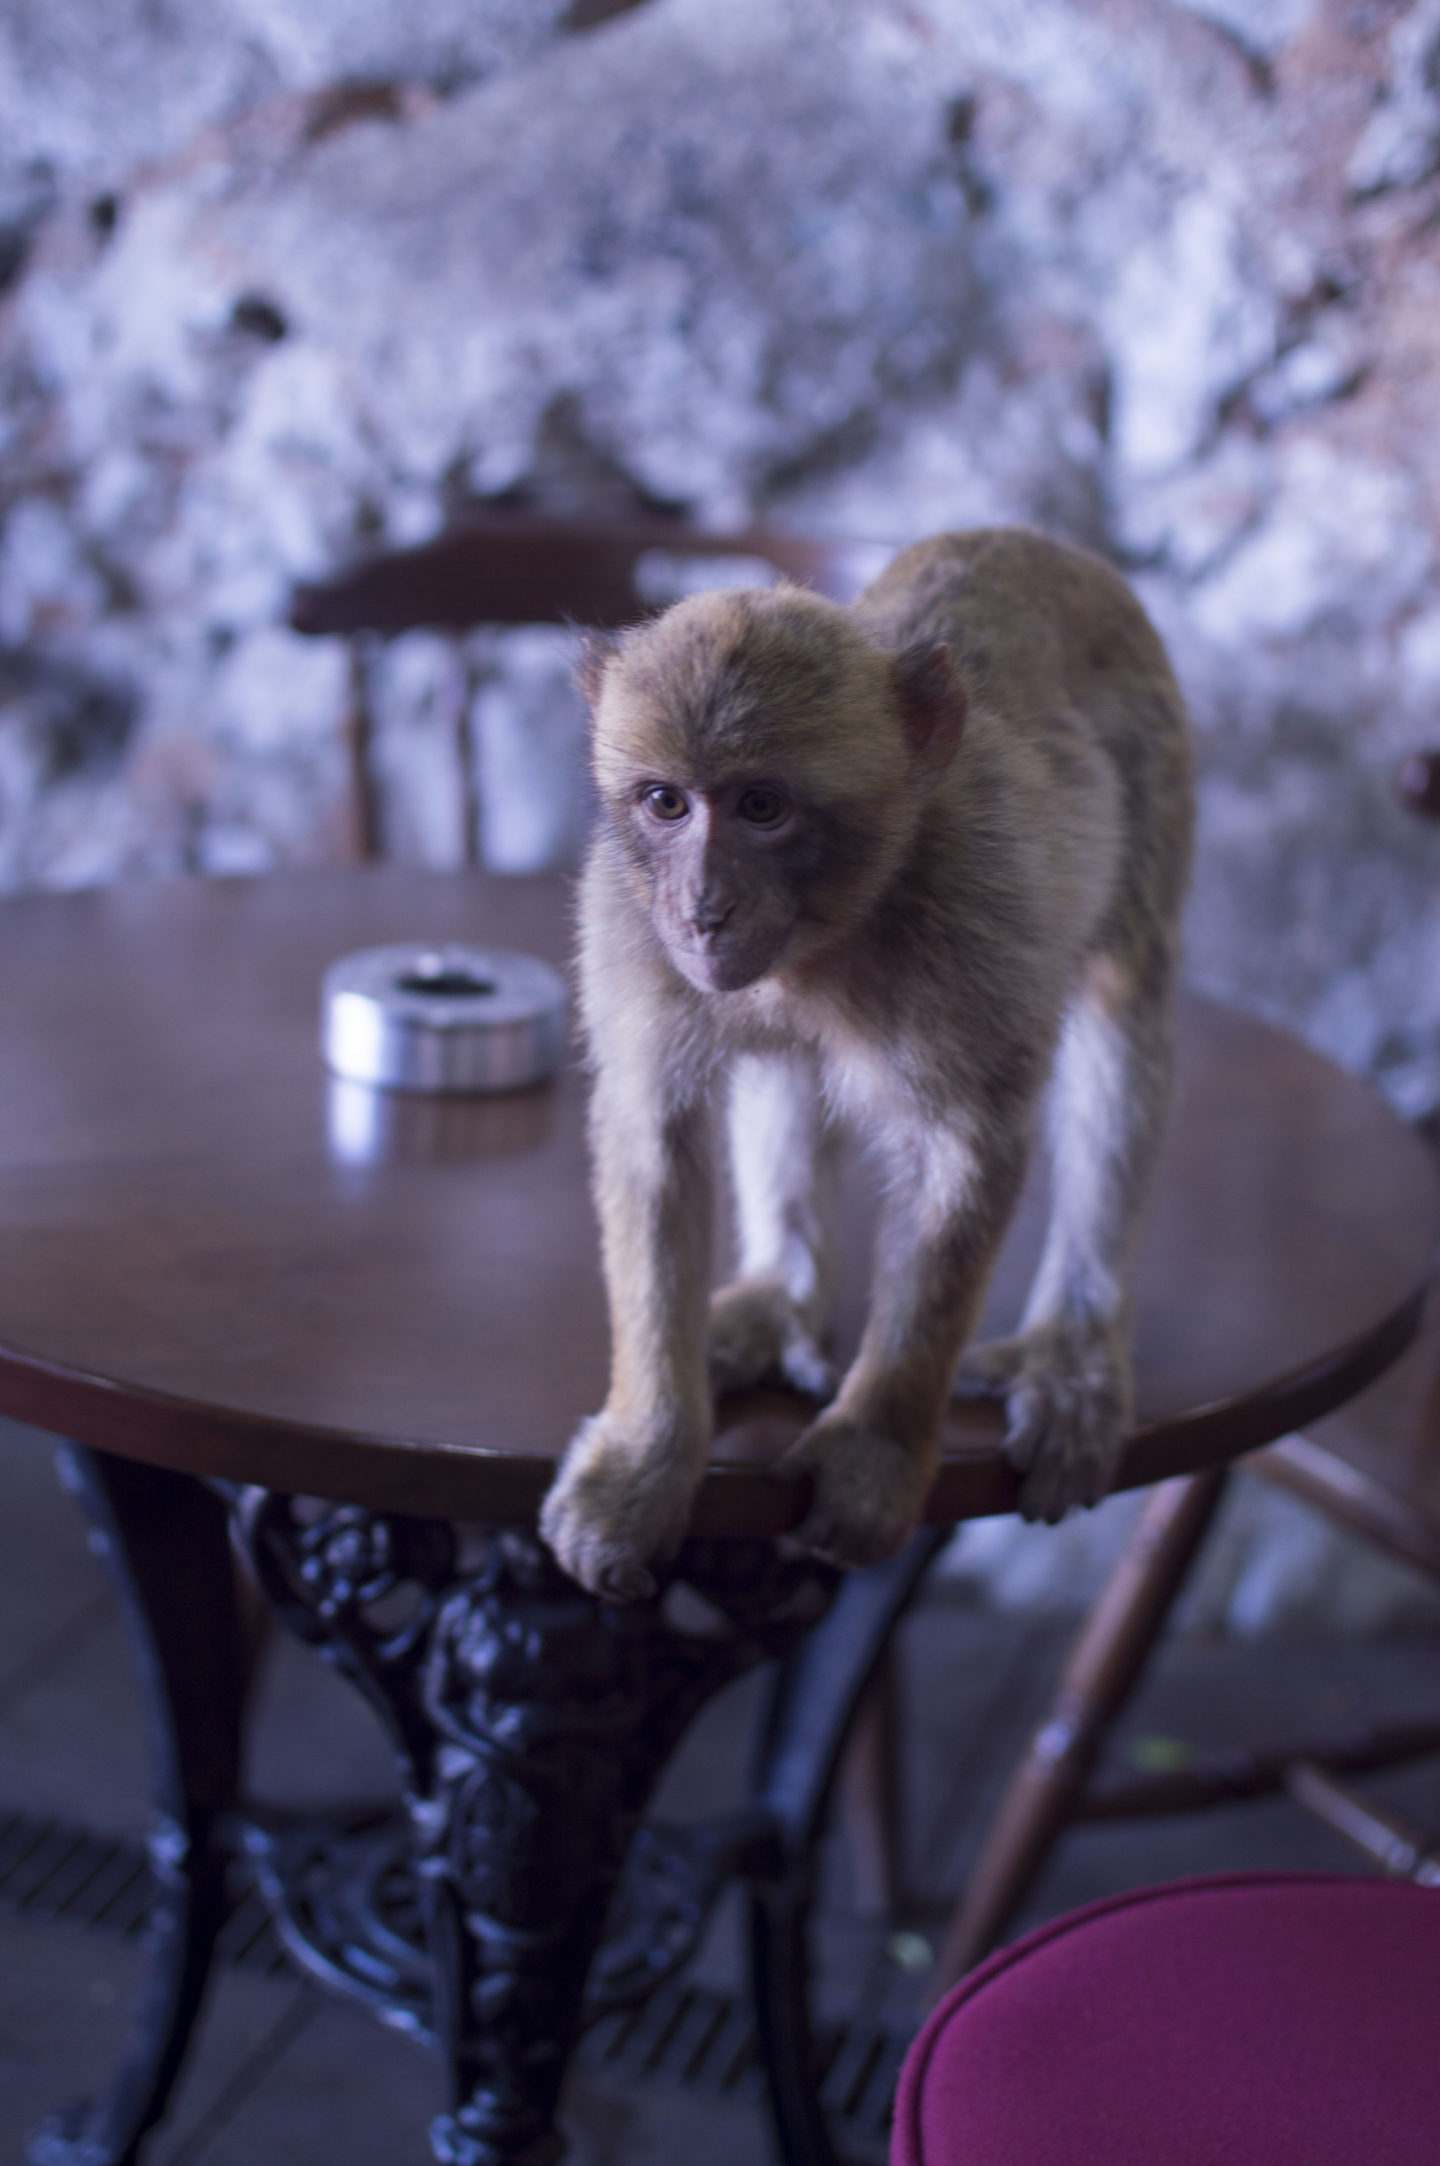 Is Gibraltar worth visiting? - monkeys!